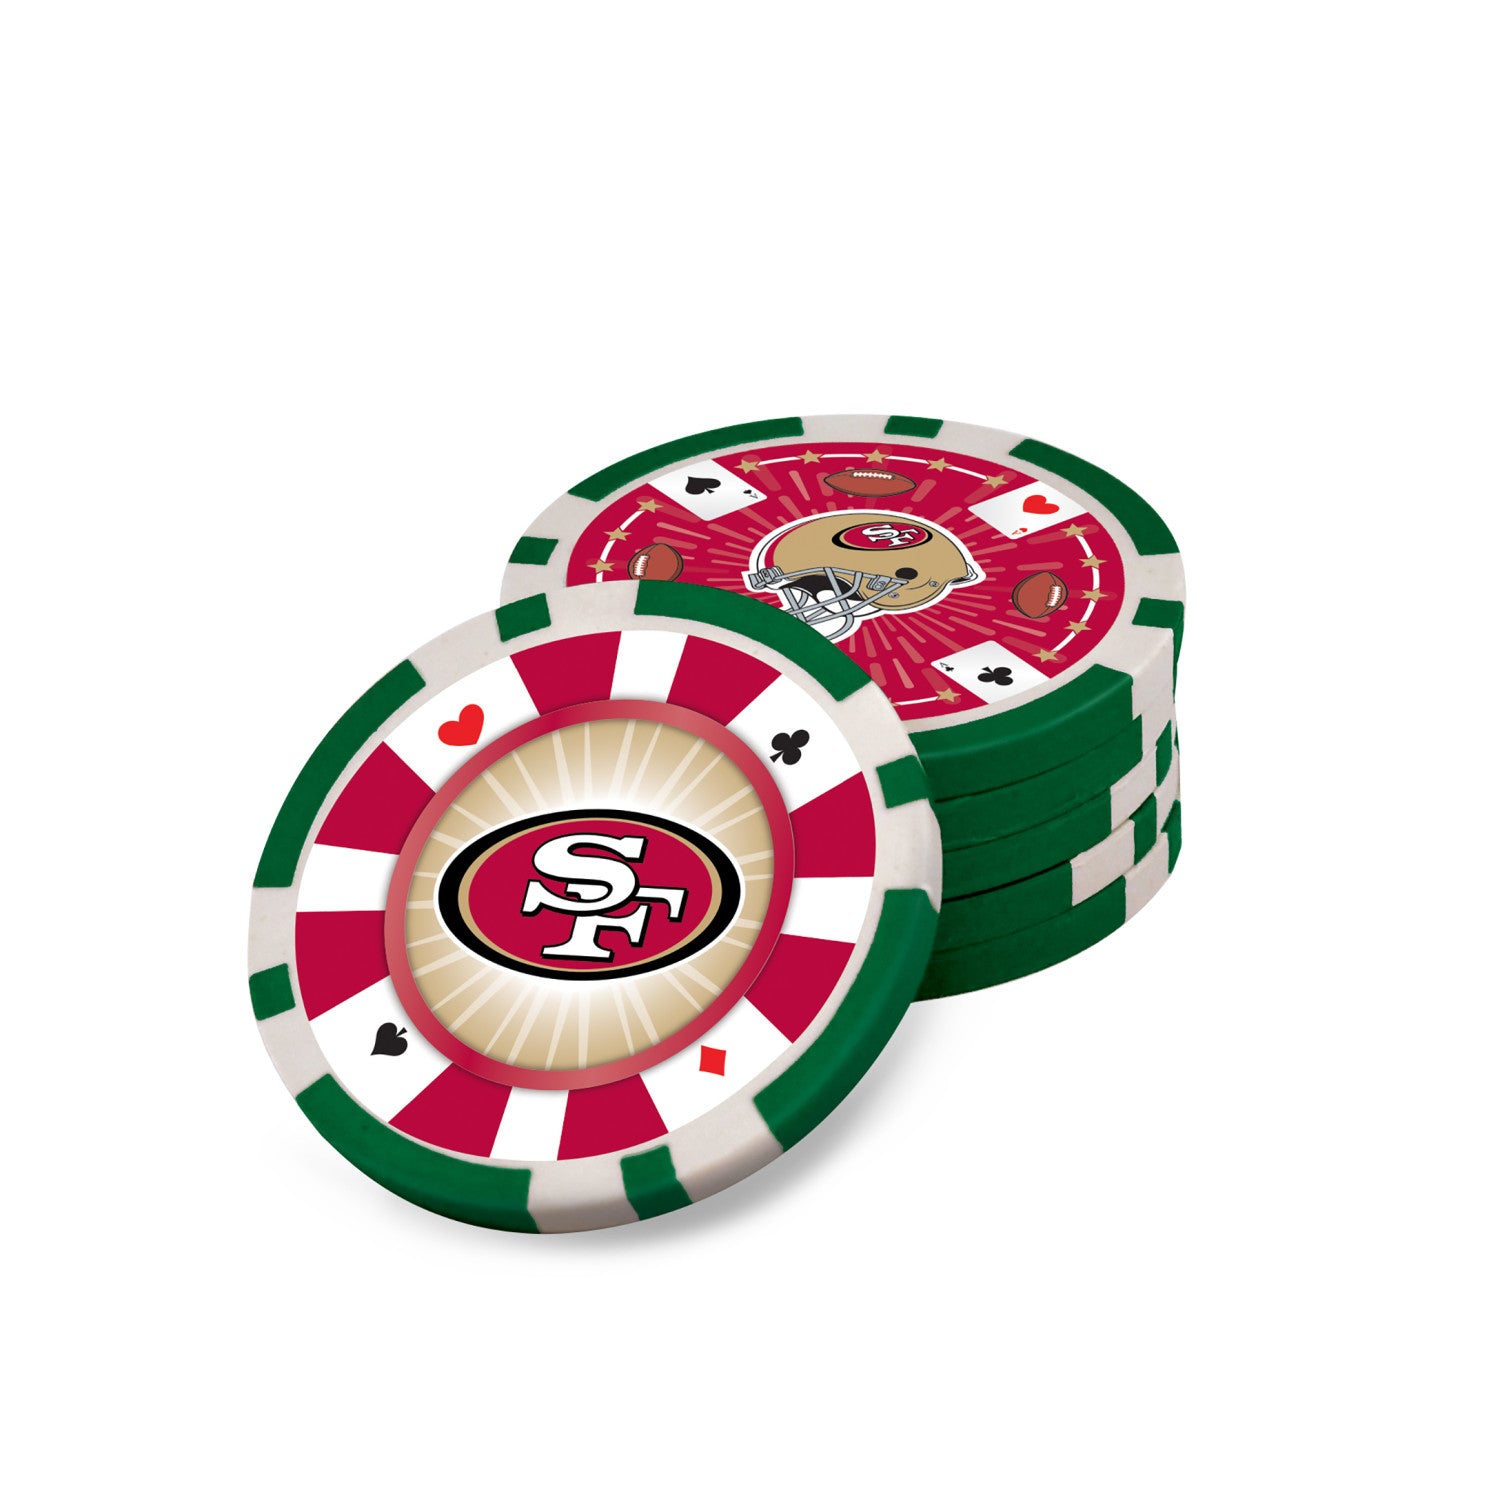 San Francisco 49ers 300 Piece Poker Set